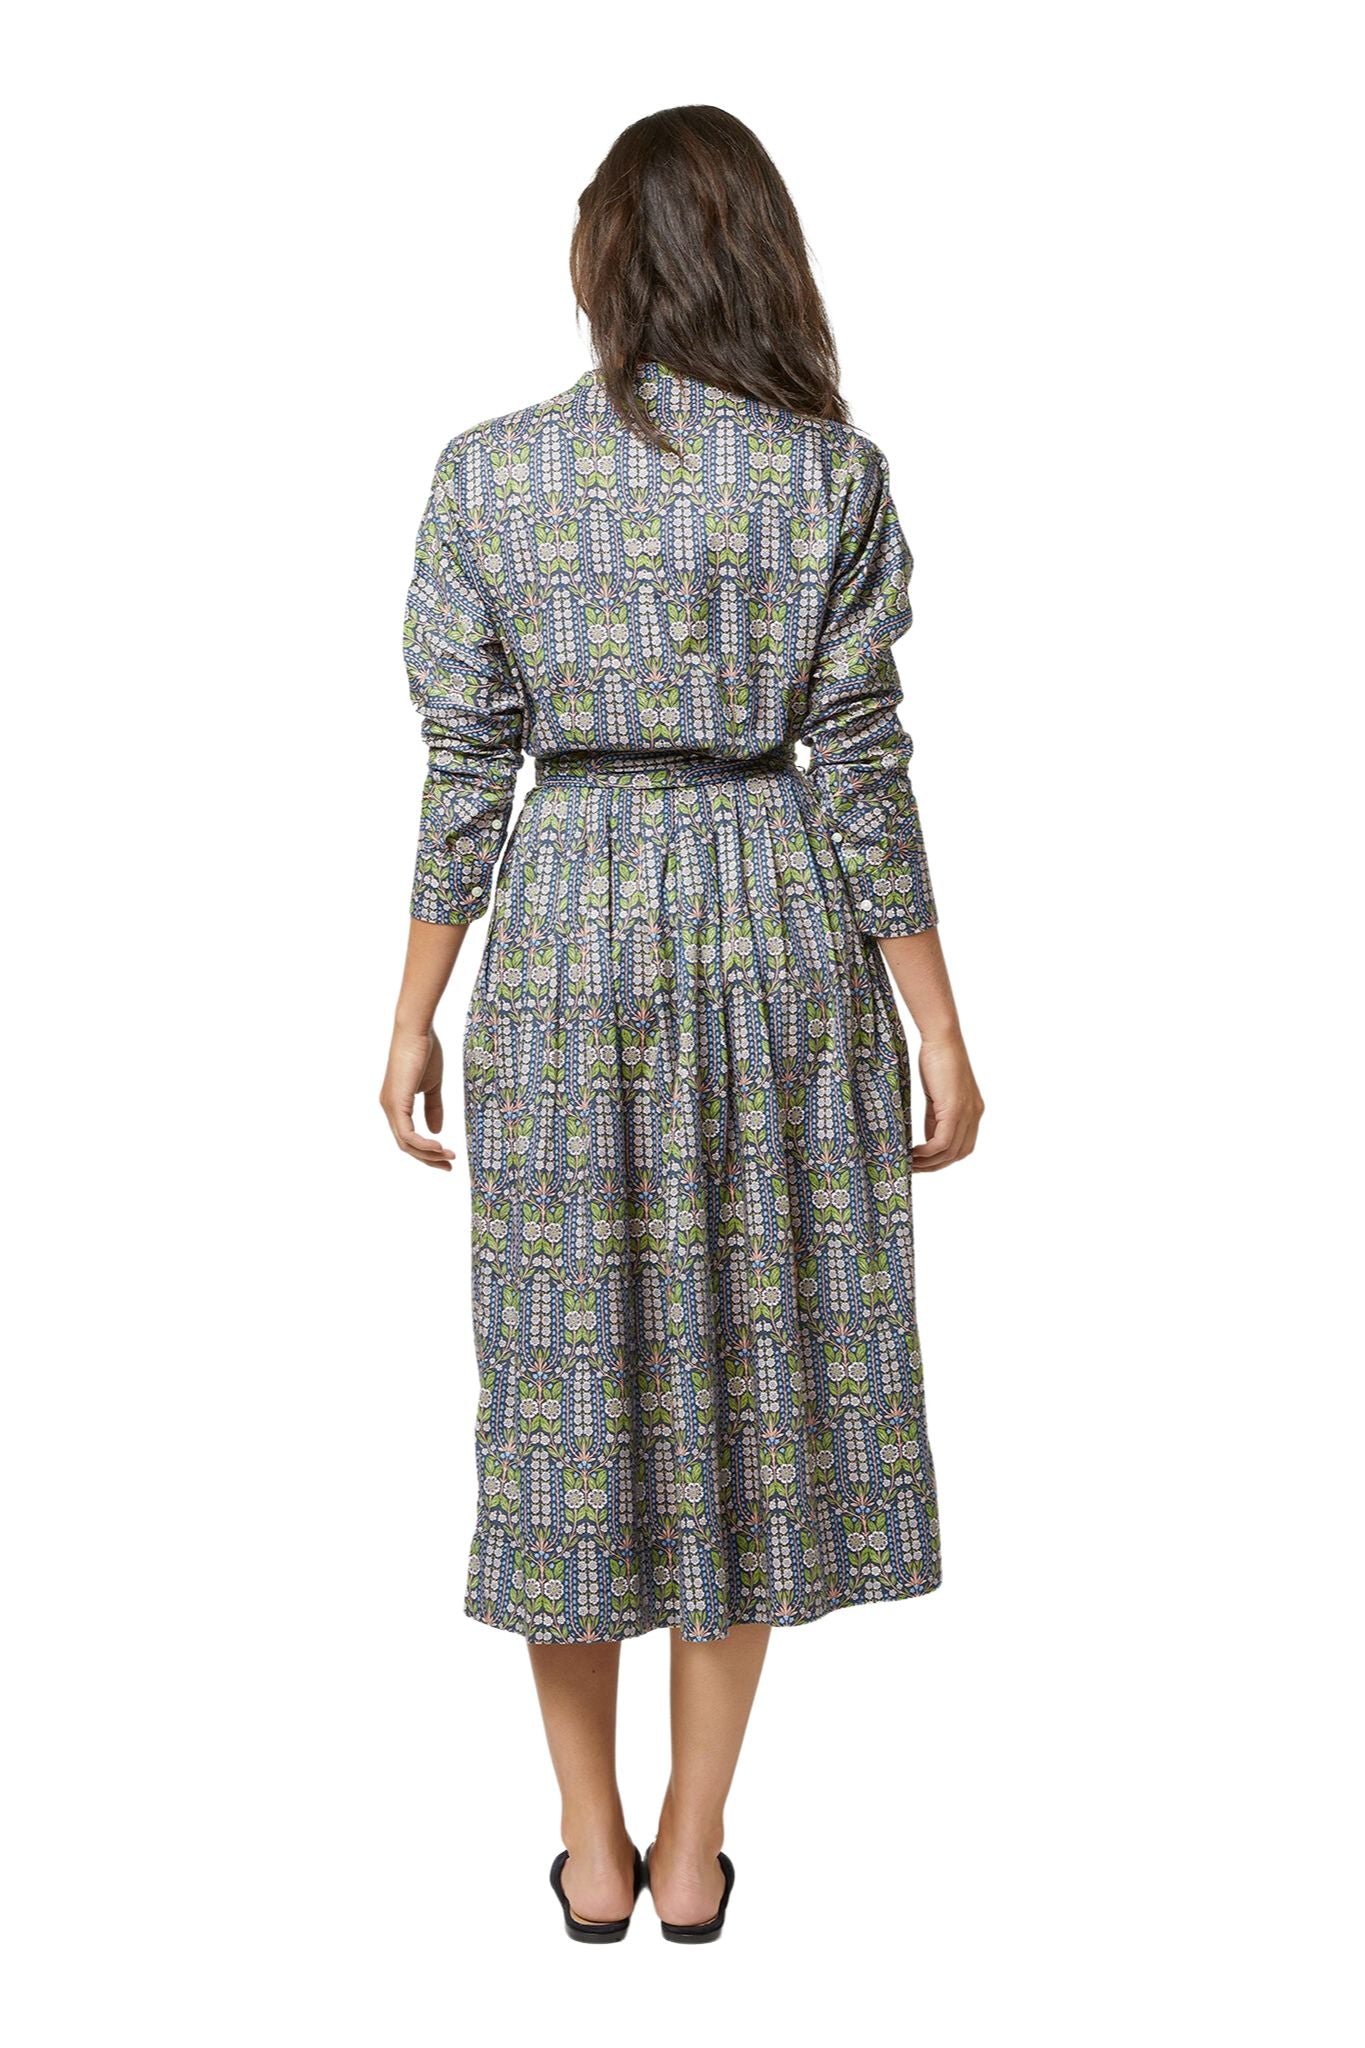 Ann Mashburn Kimono Shirtwaist Dress